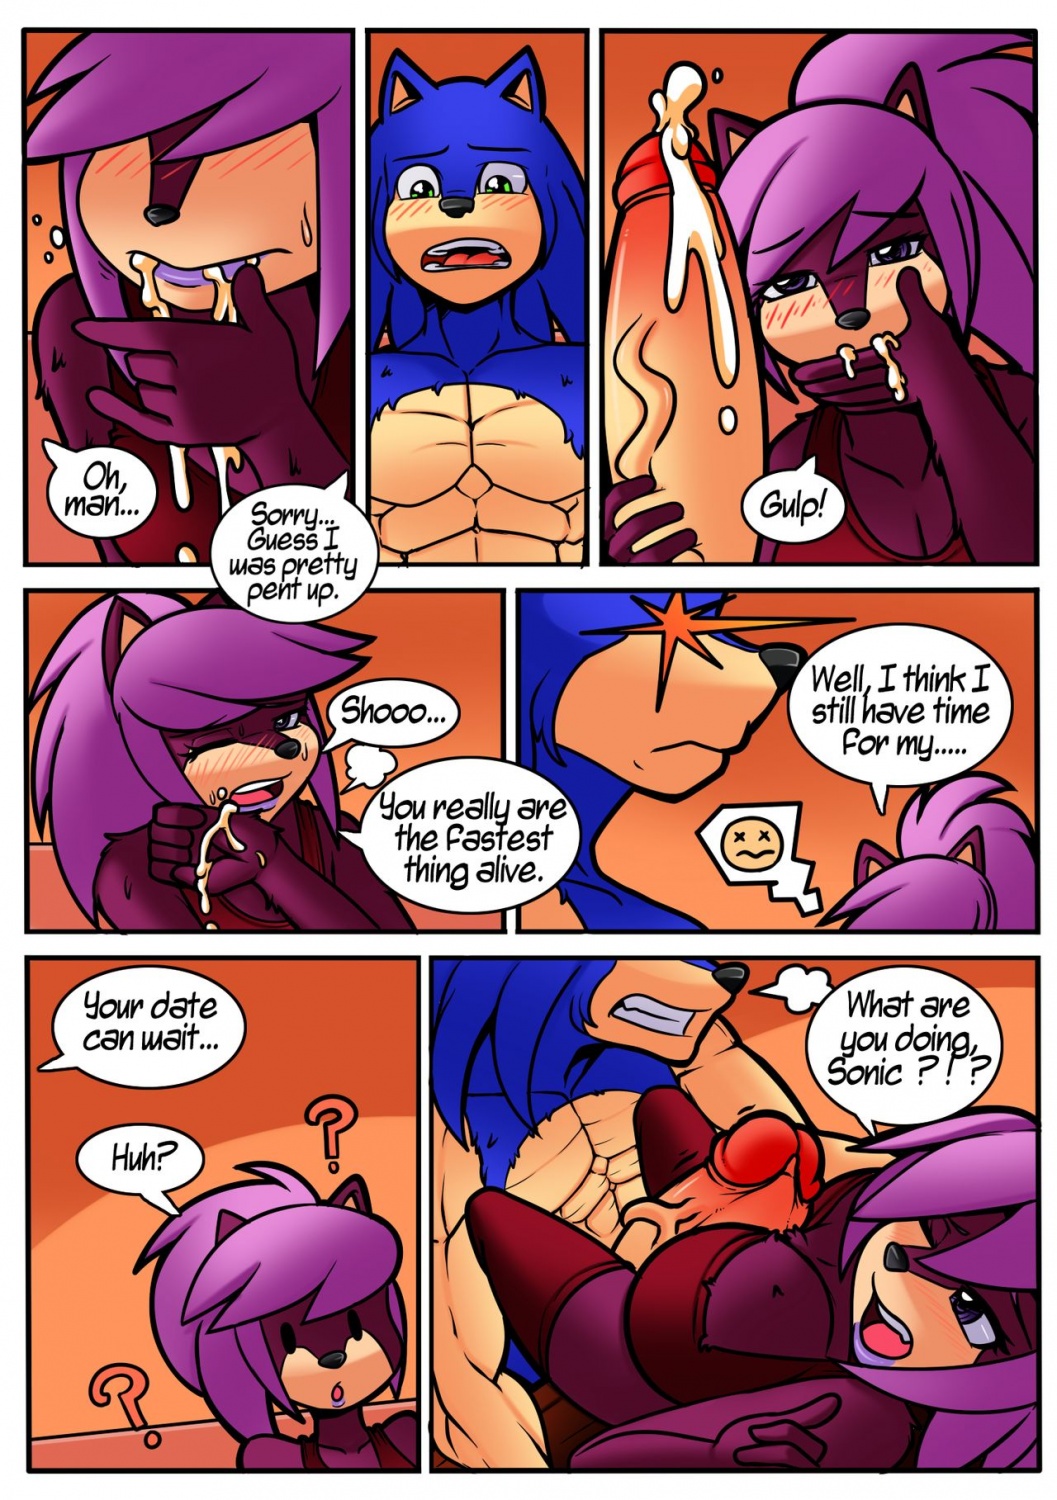 Sonic date night porn comic